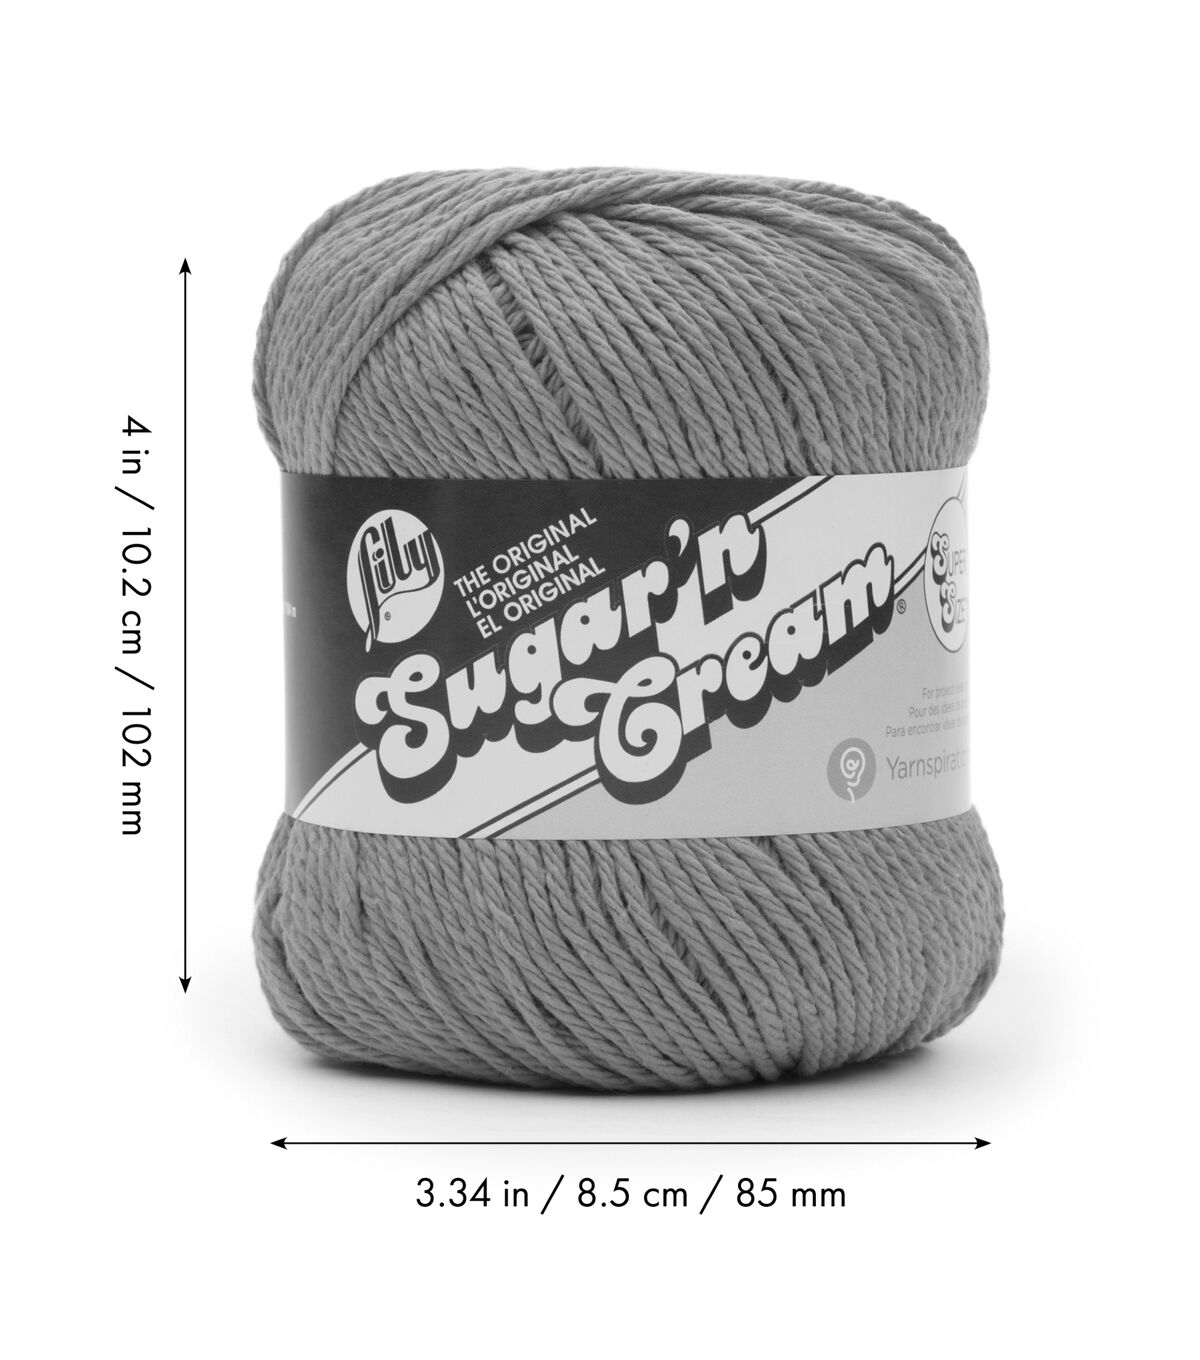 Sugar'n Cream Yarn - Solids Super Size Rose Pink